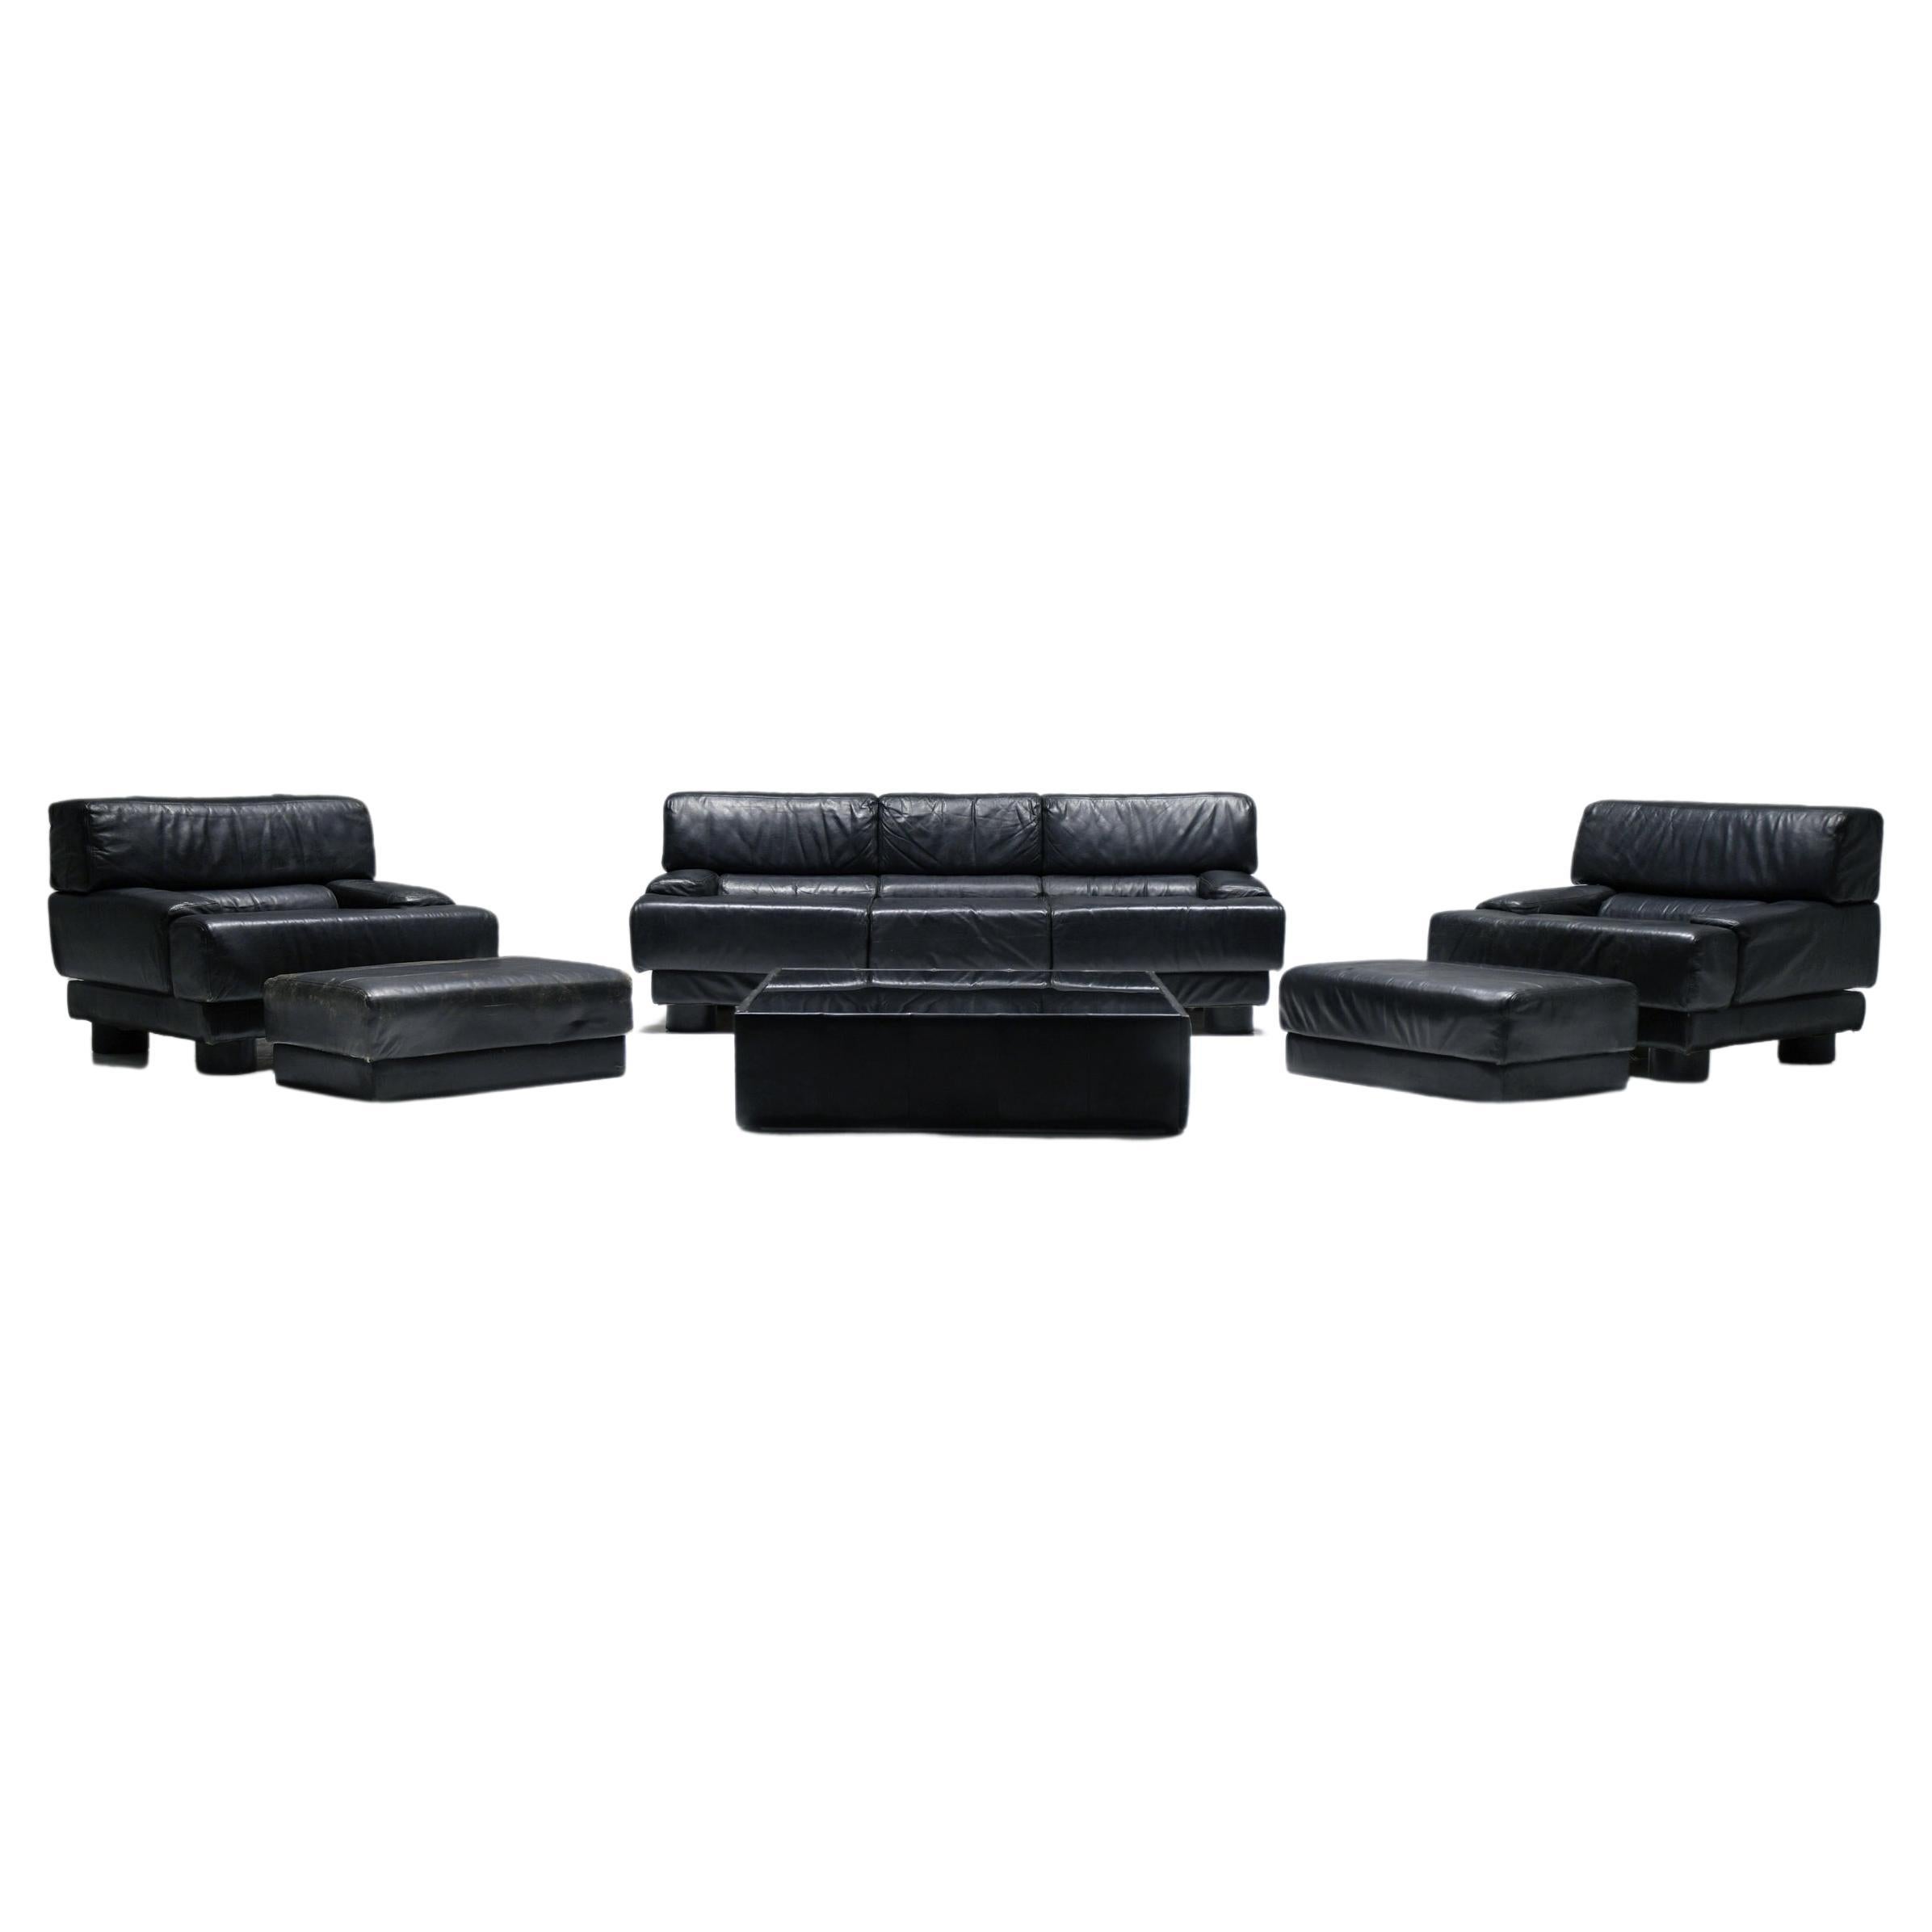 Stunning Percival Lafer sofa set in original black leather - Lafer S.A. - Brazil For Sale